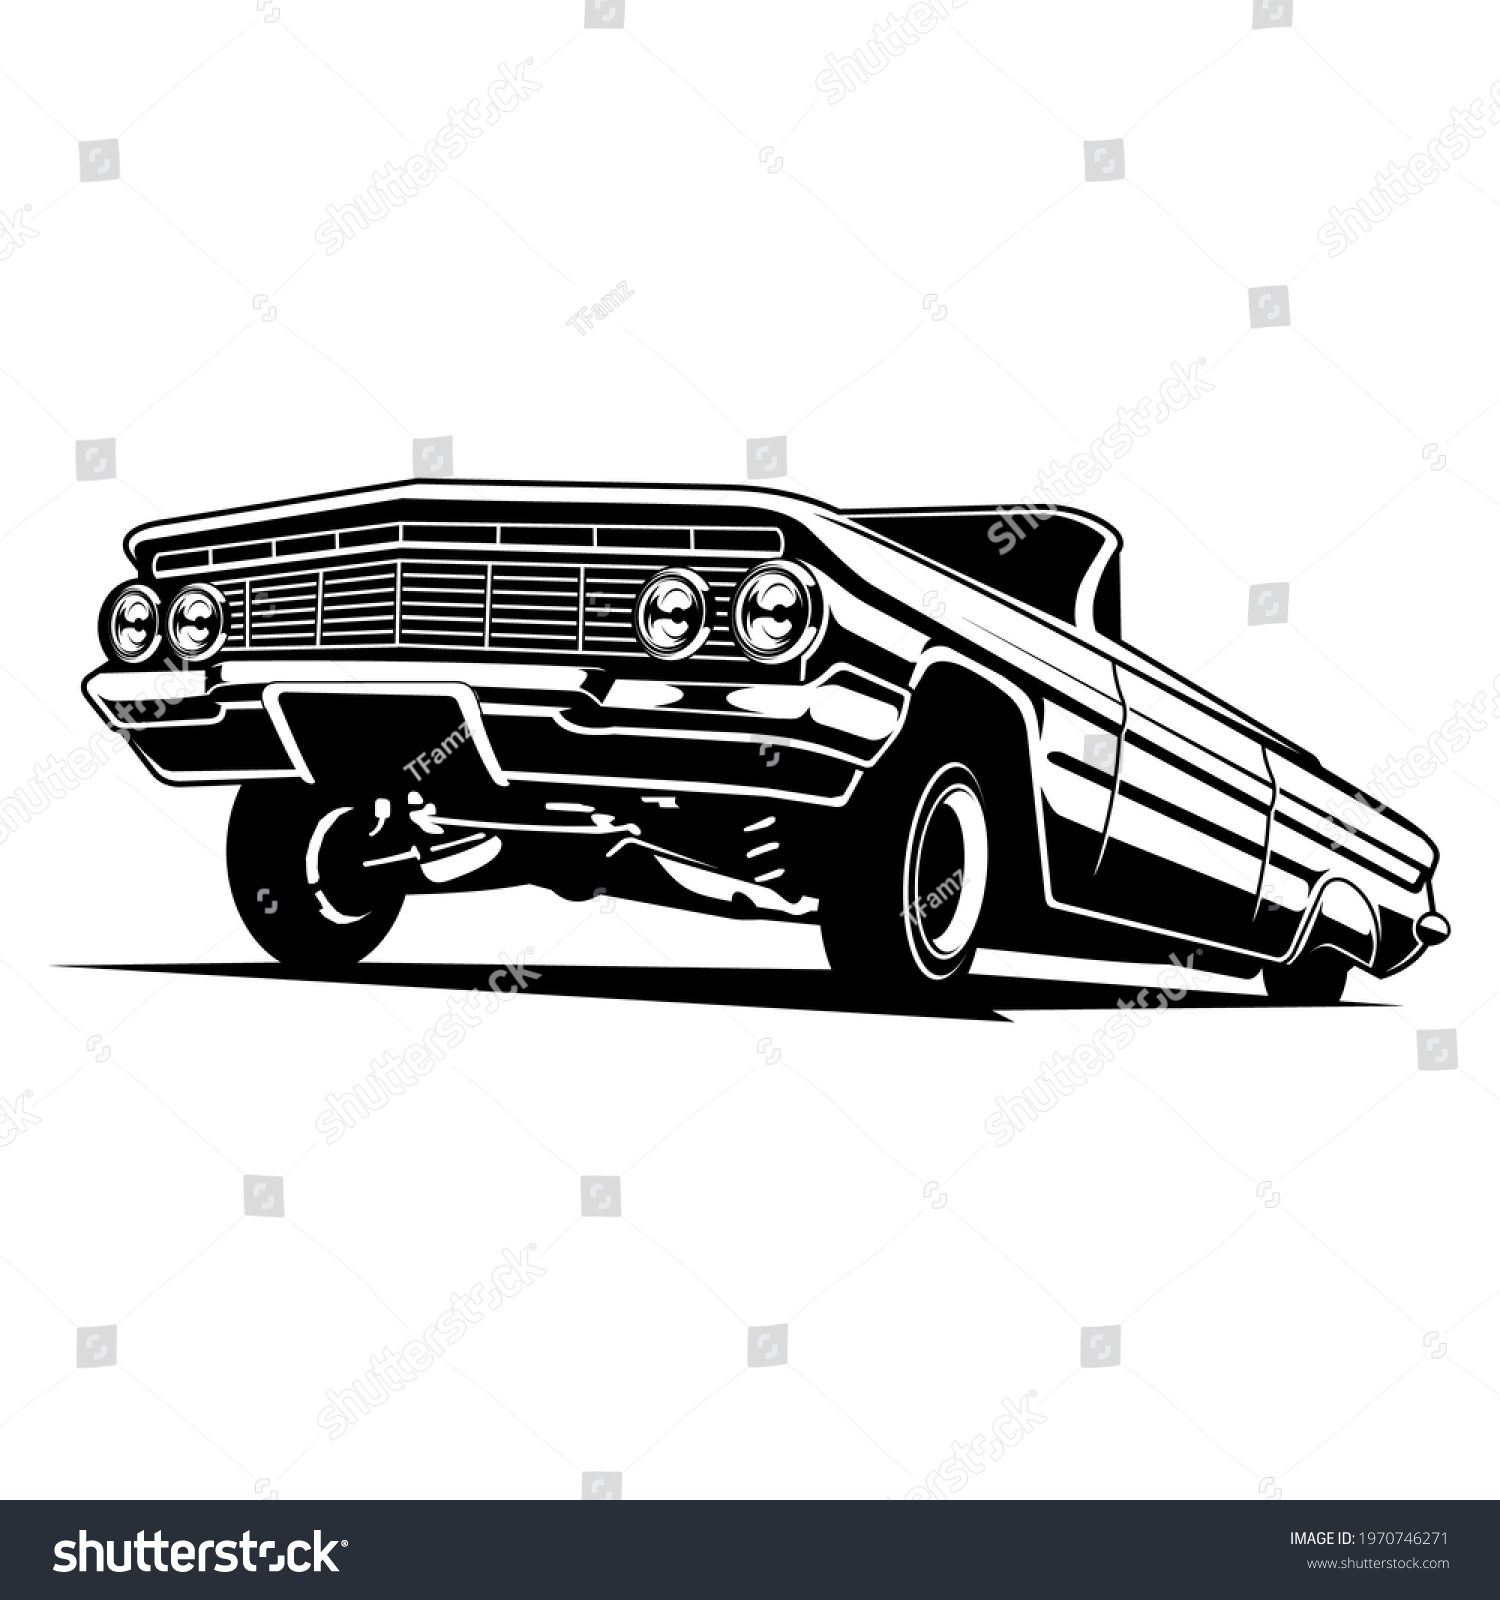 SVG of vintage lowrider car detailed image in black and white svg